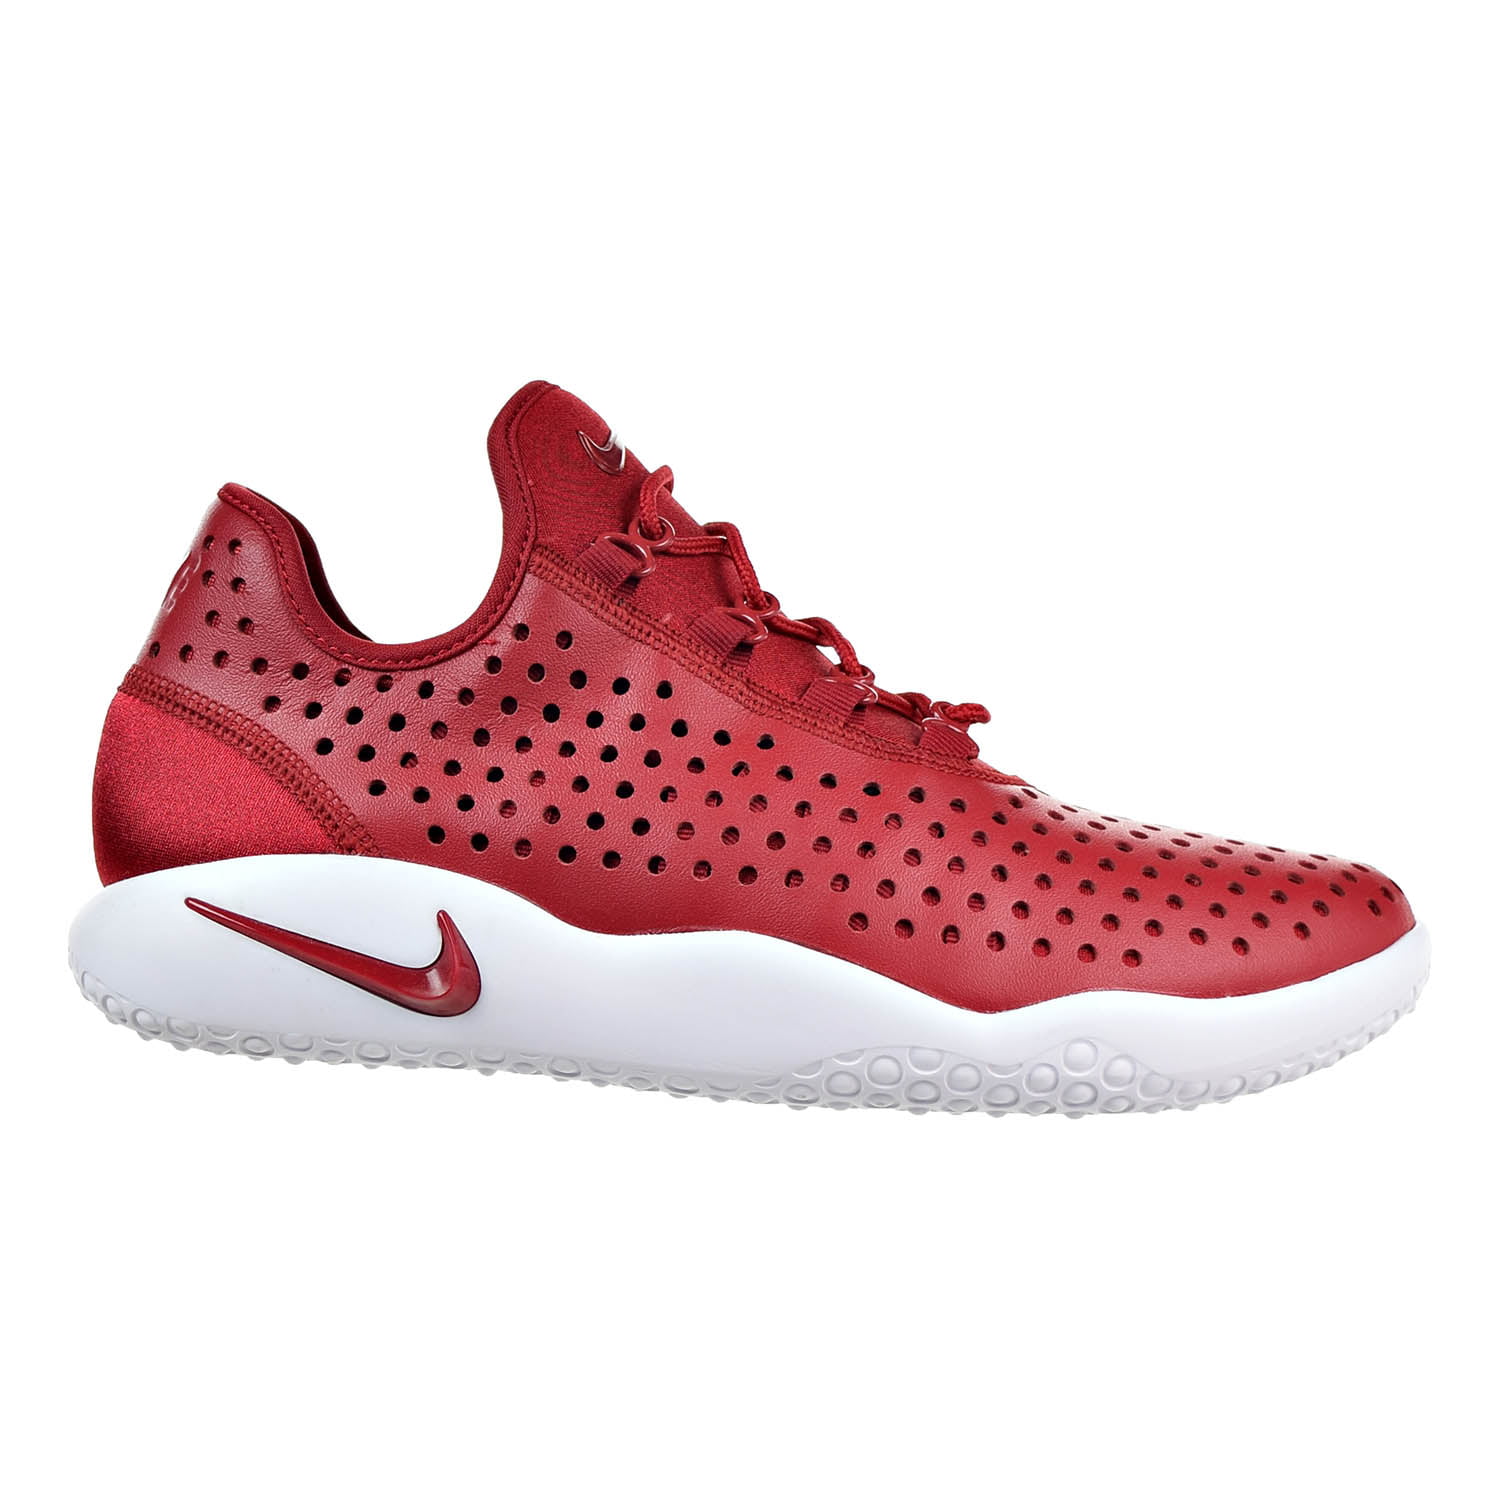 Nike Fl-Rue Gym Red/White 880994-600 - Walmart.com